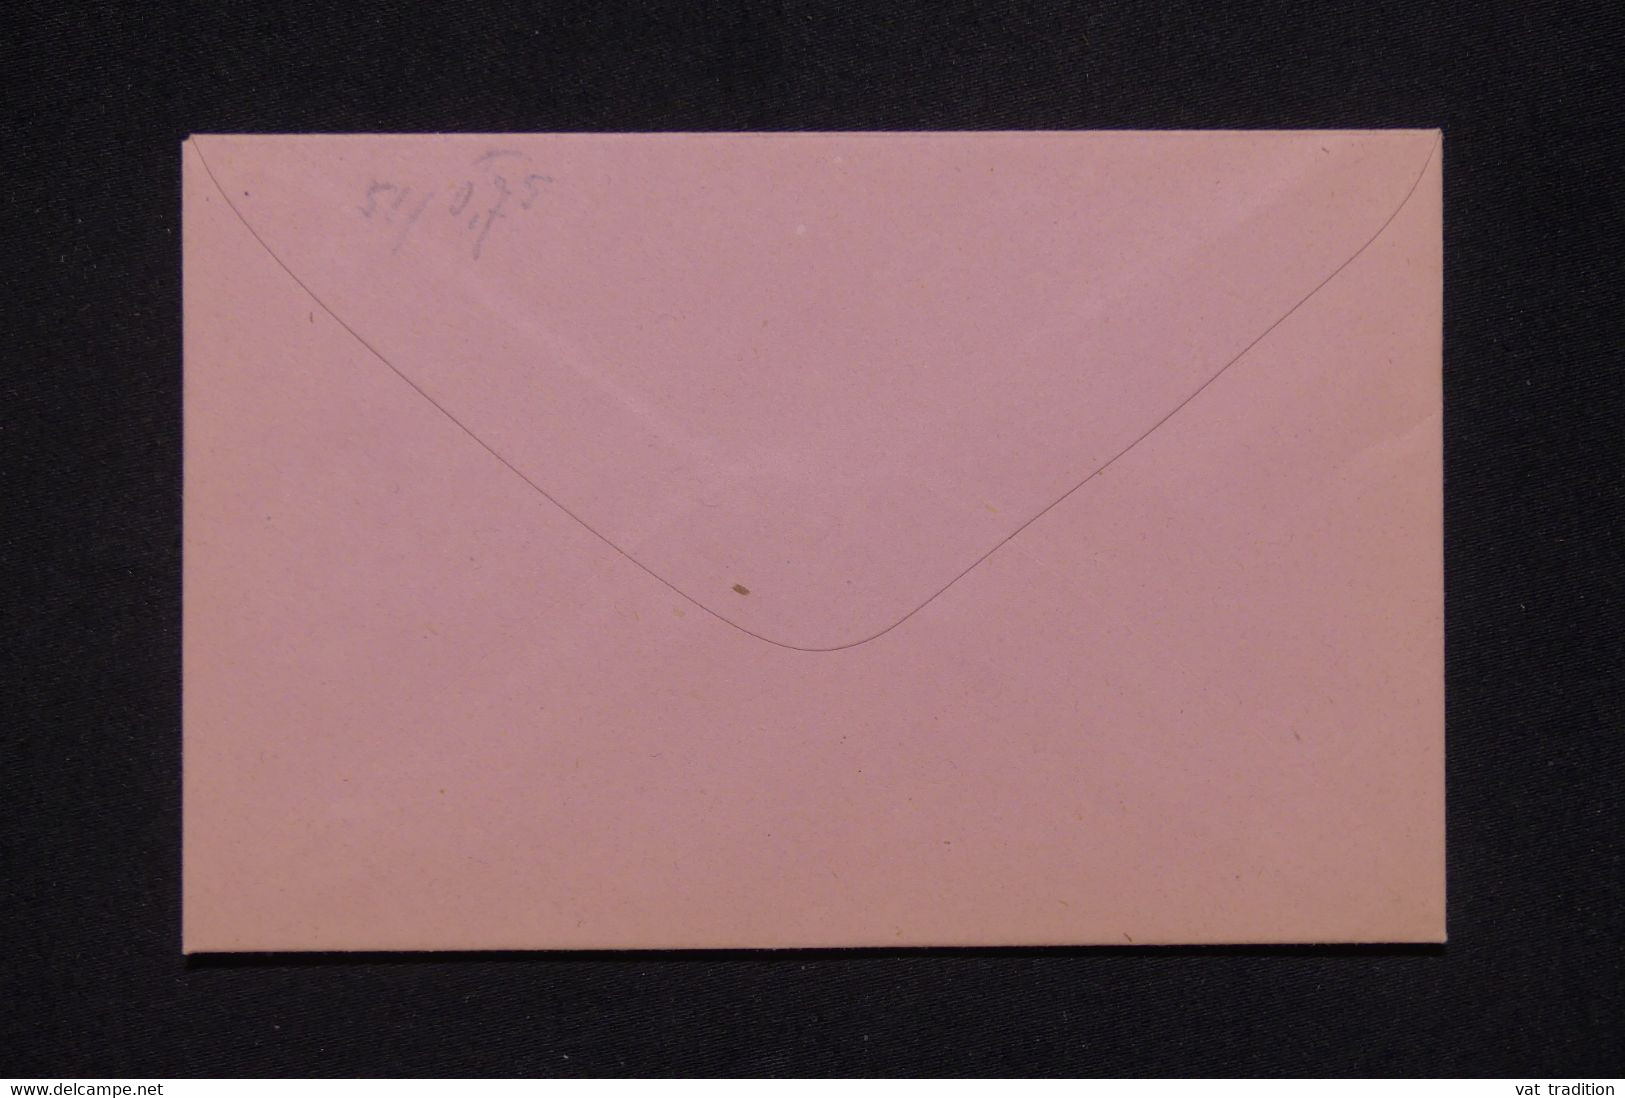 BÉNIN - Entier Postal ( Enveloppe ) Au Type Groupe, Non Circulé - L 134134 - Storia Postale